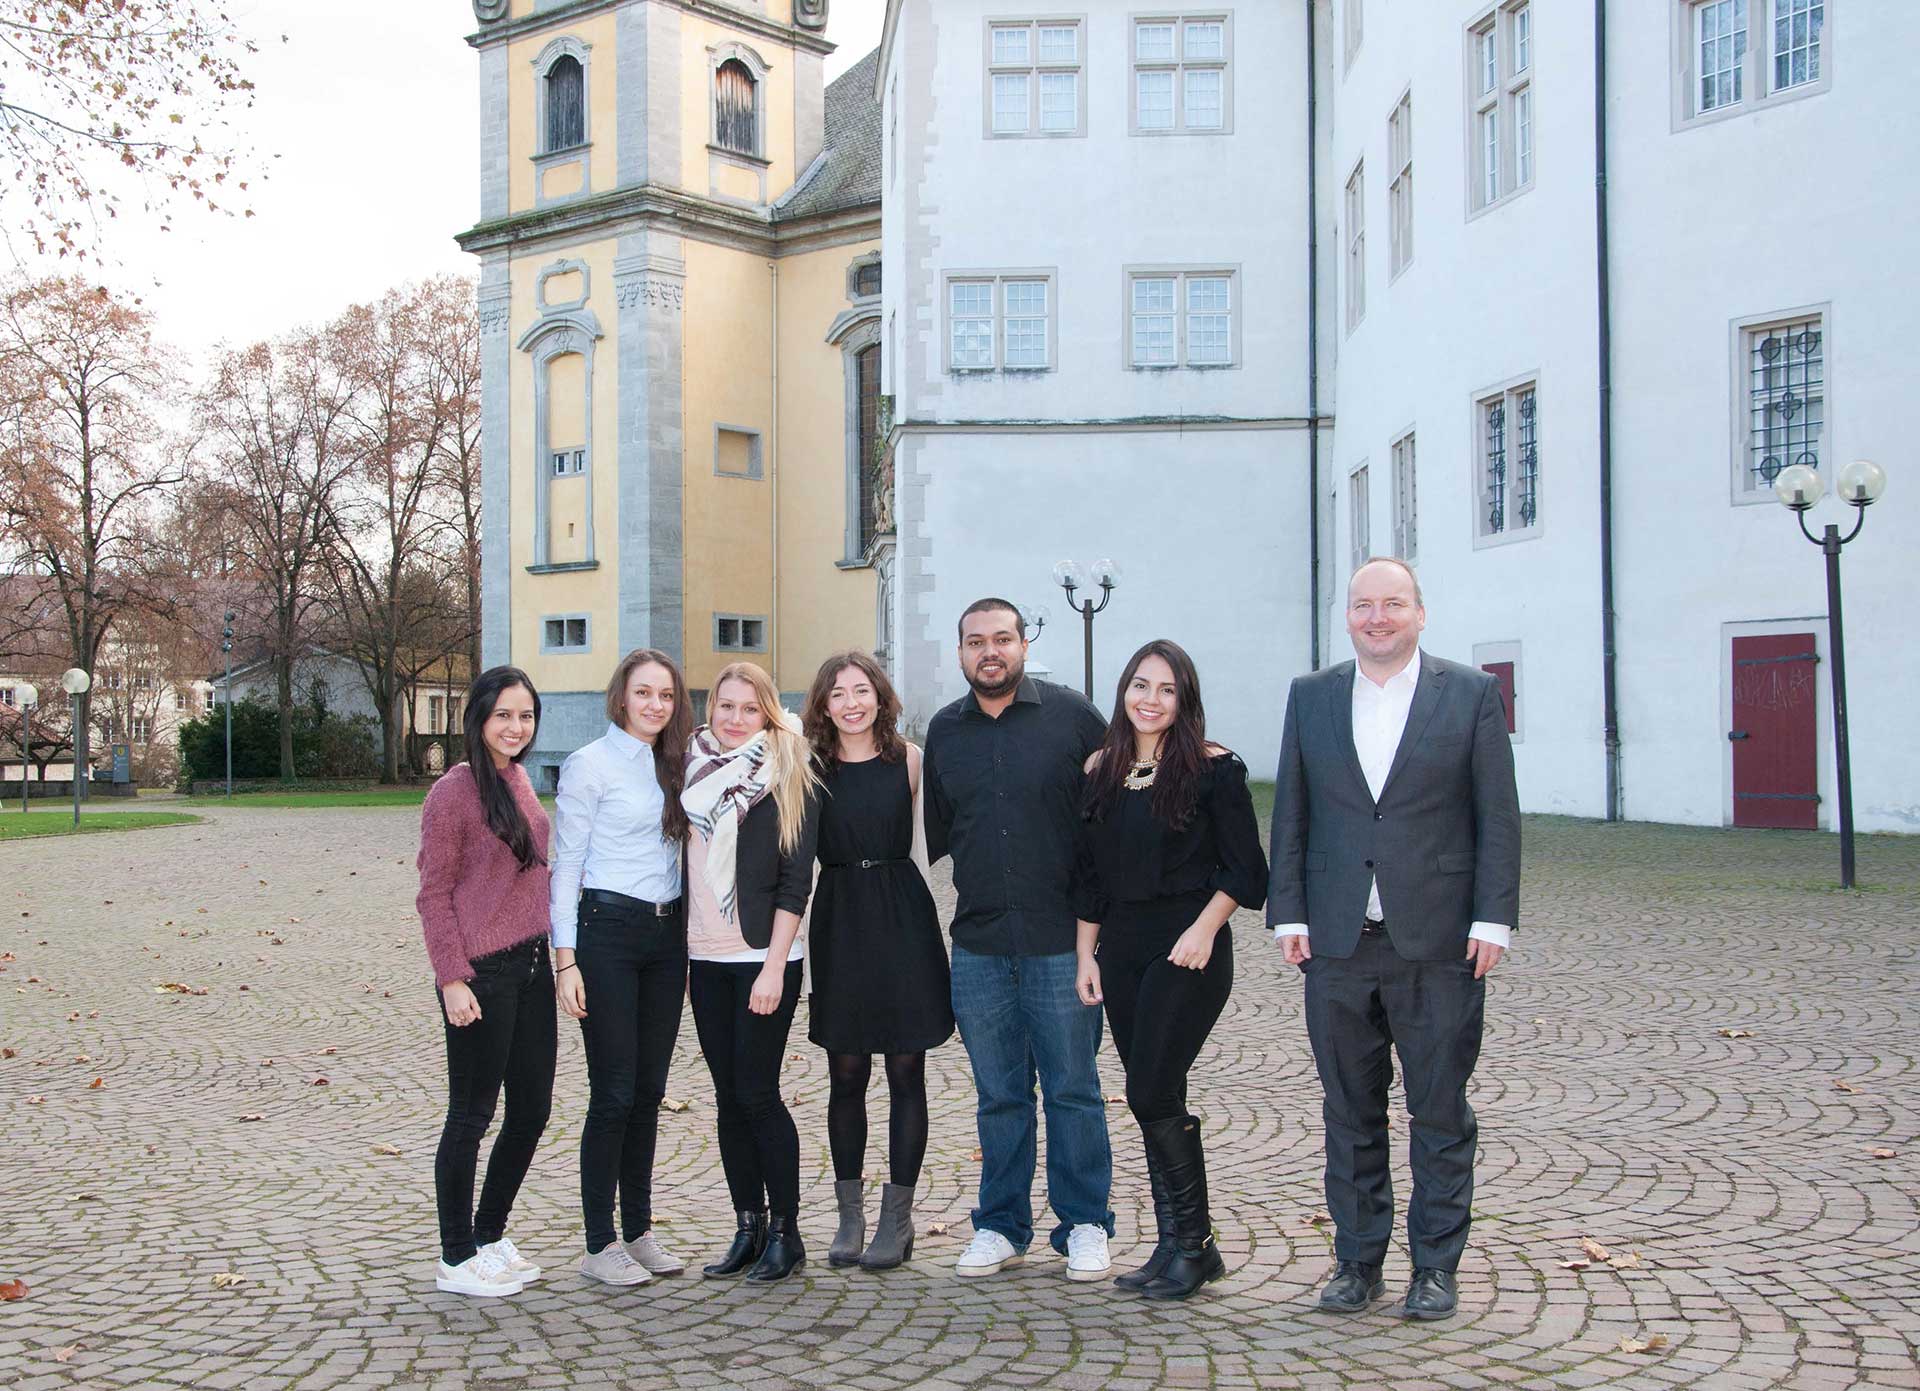 Gruppenbild vor dem Schloss Bad Mergentheim